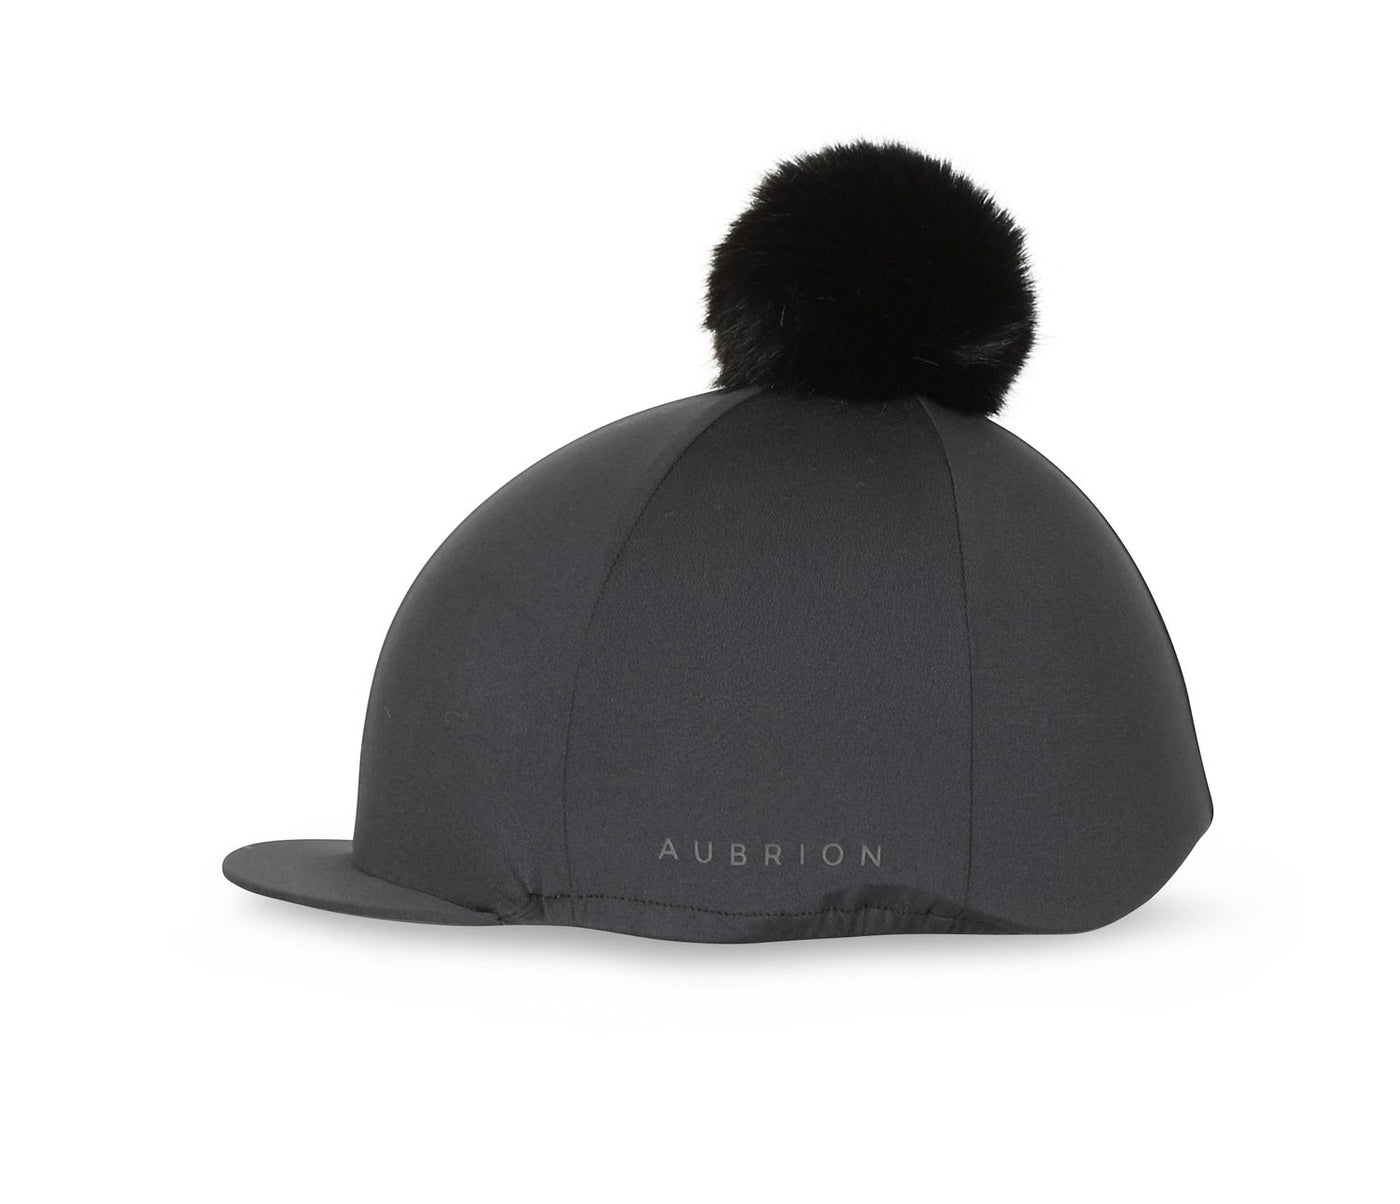 Aubrion Pom Pom Hat Cover - Black